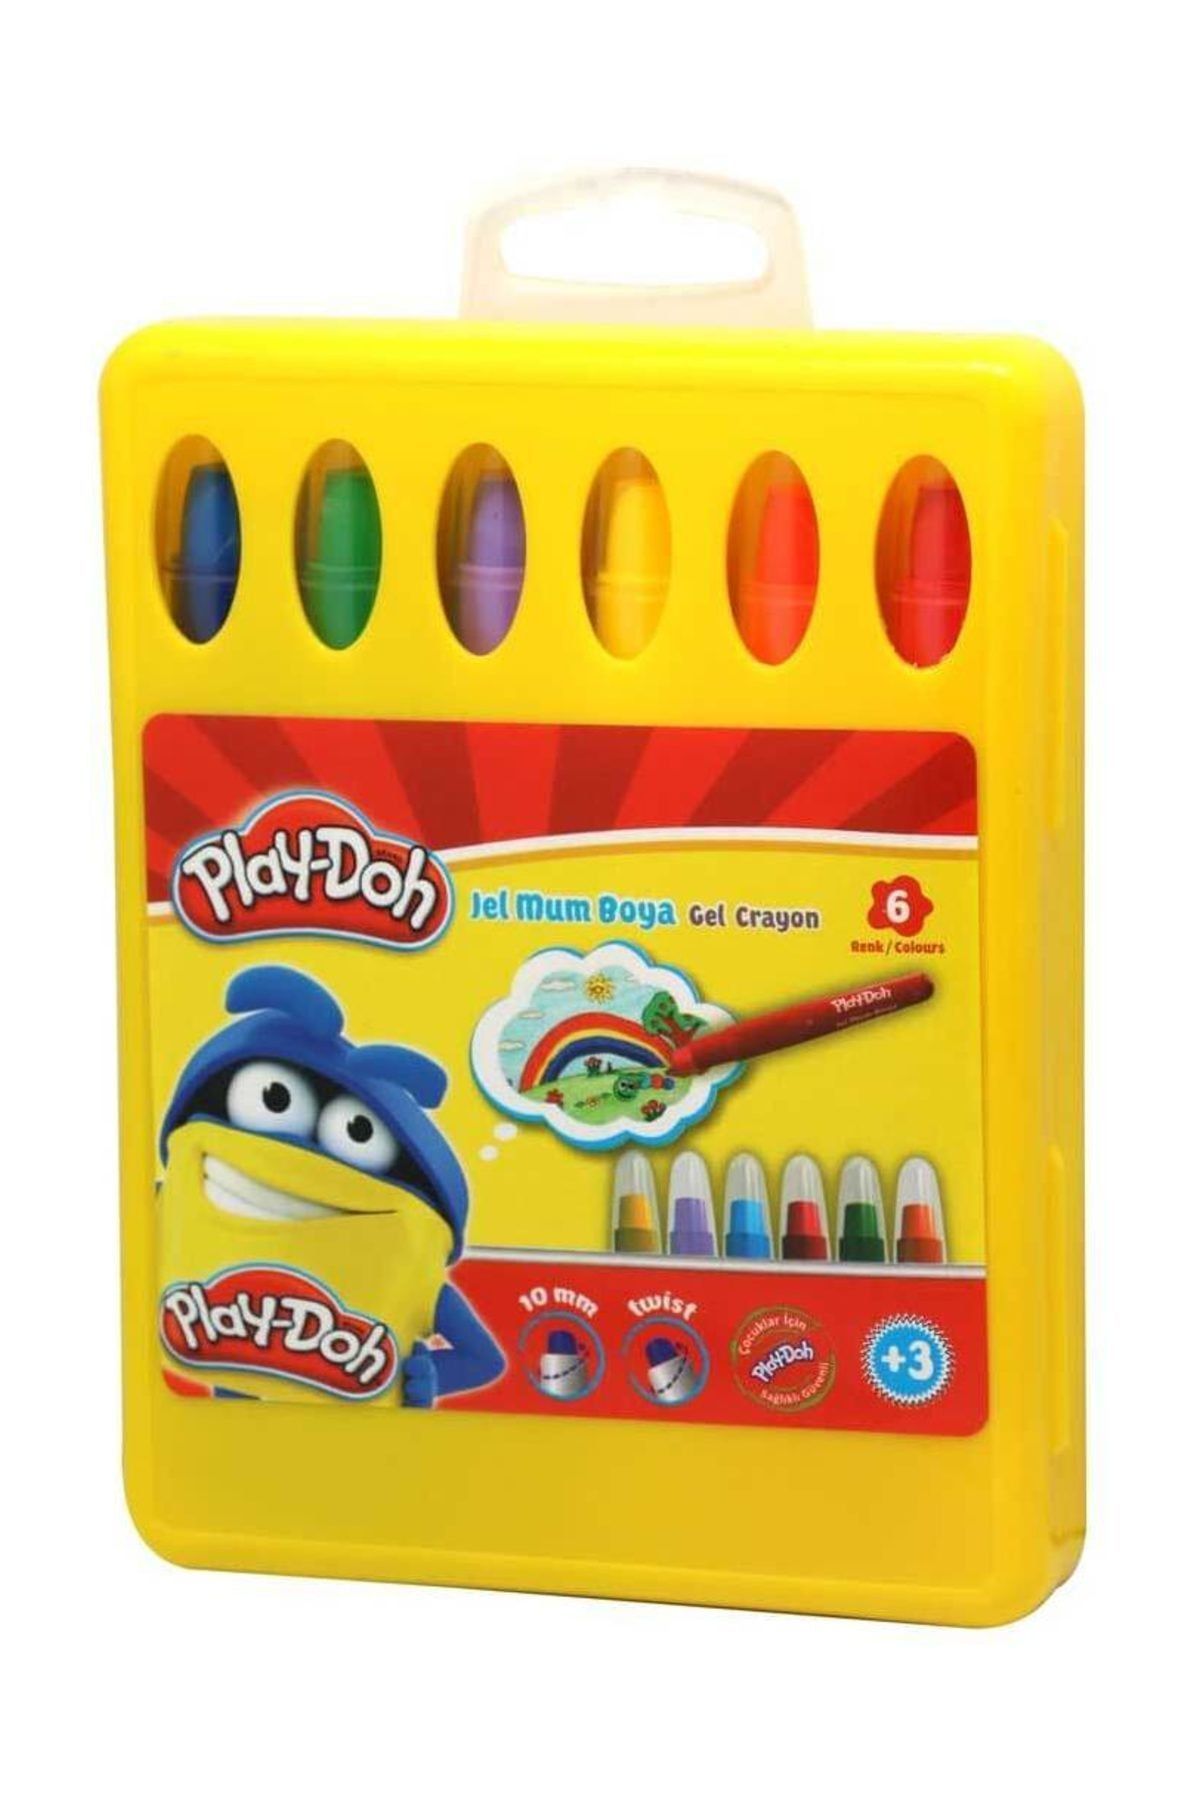 Play Doh Crayon Jel Mum Boya 6 Renk